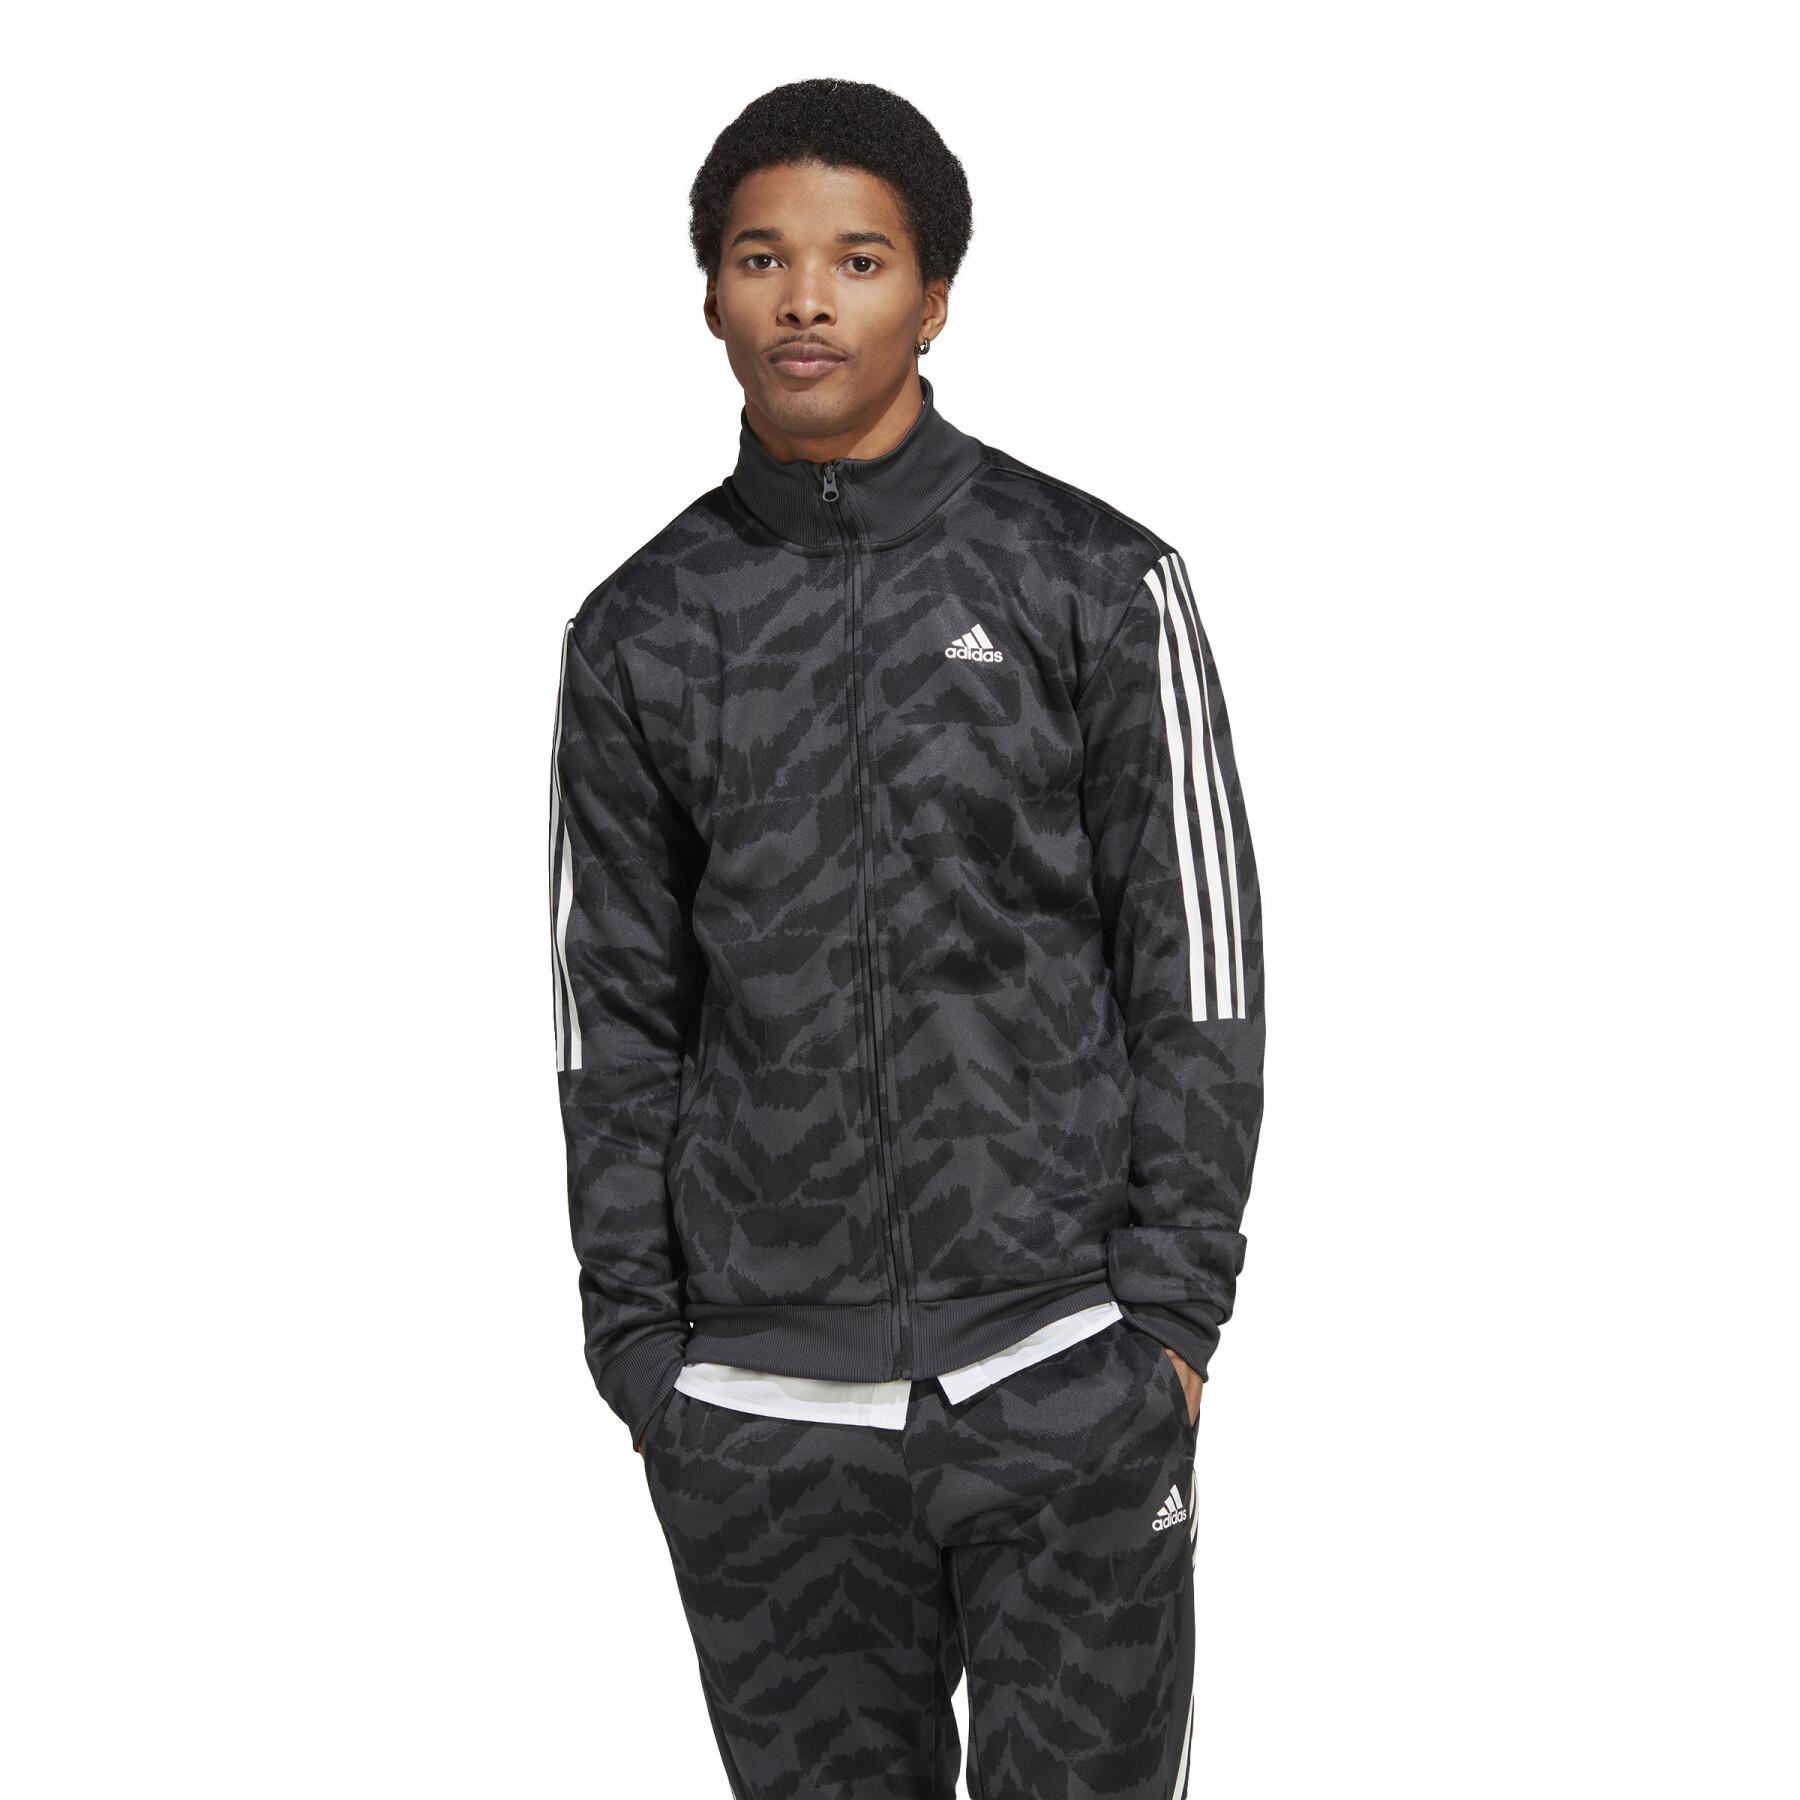 Sweat jacket adidas Tiro Suit-Up - Jackets and tracksuits - Textile -  Handball wear